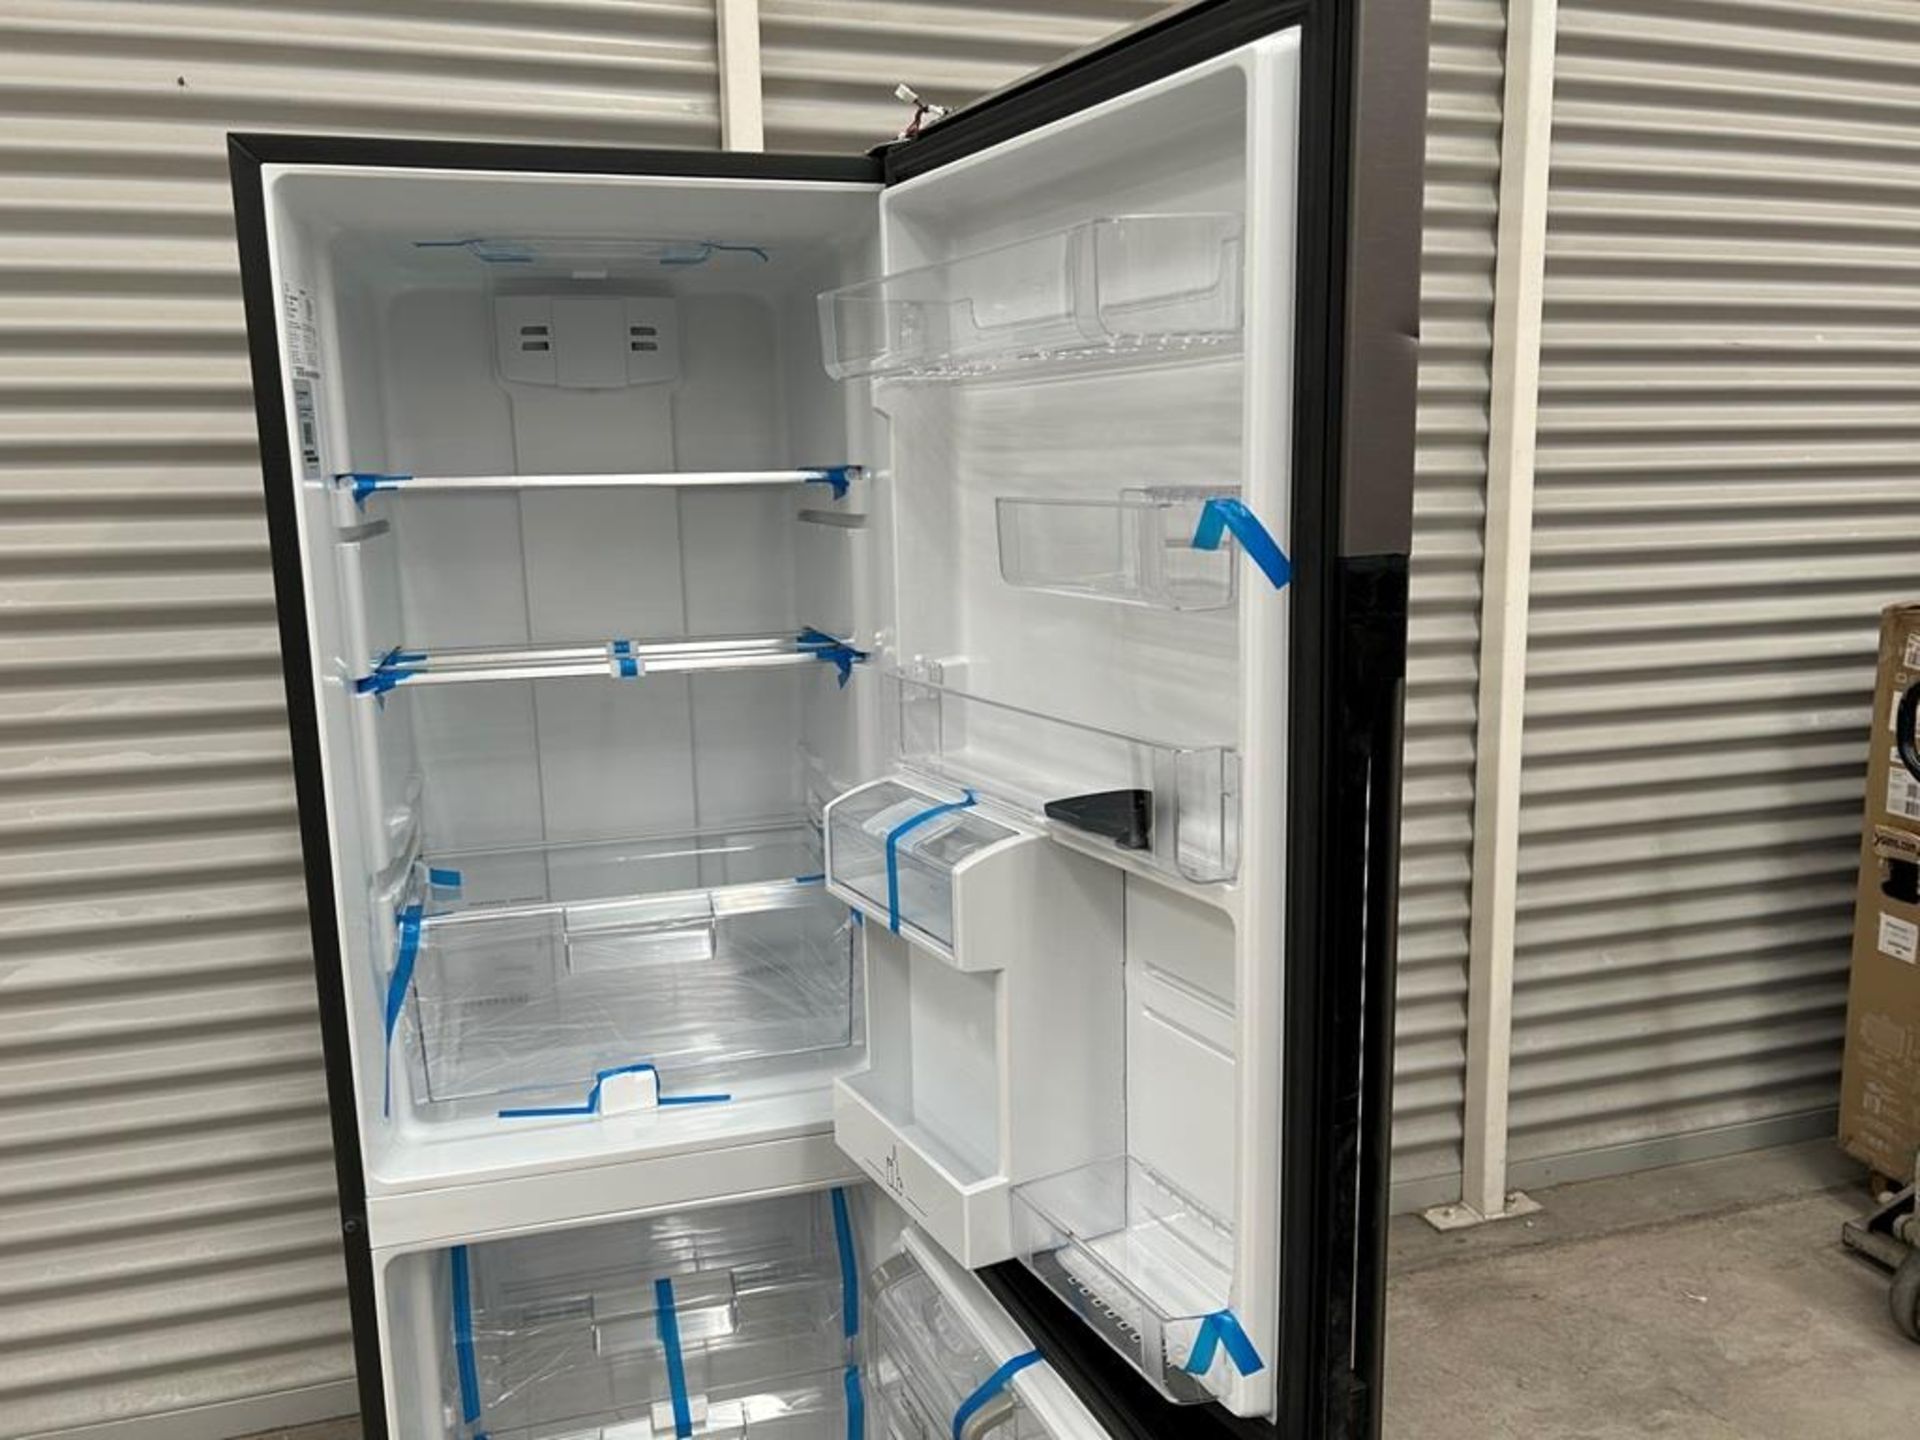 Refrigerador con dispensador de agua Marca MABE, Modelo RMB400IAMRM, Serie 07133, Color GRIS (Equip - Image 8 of 11